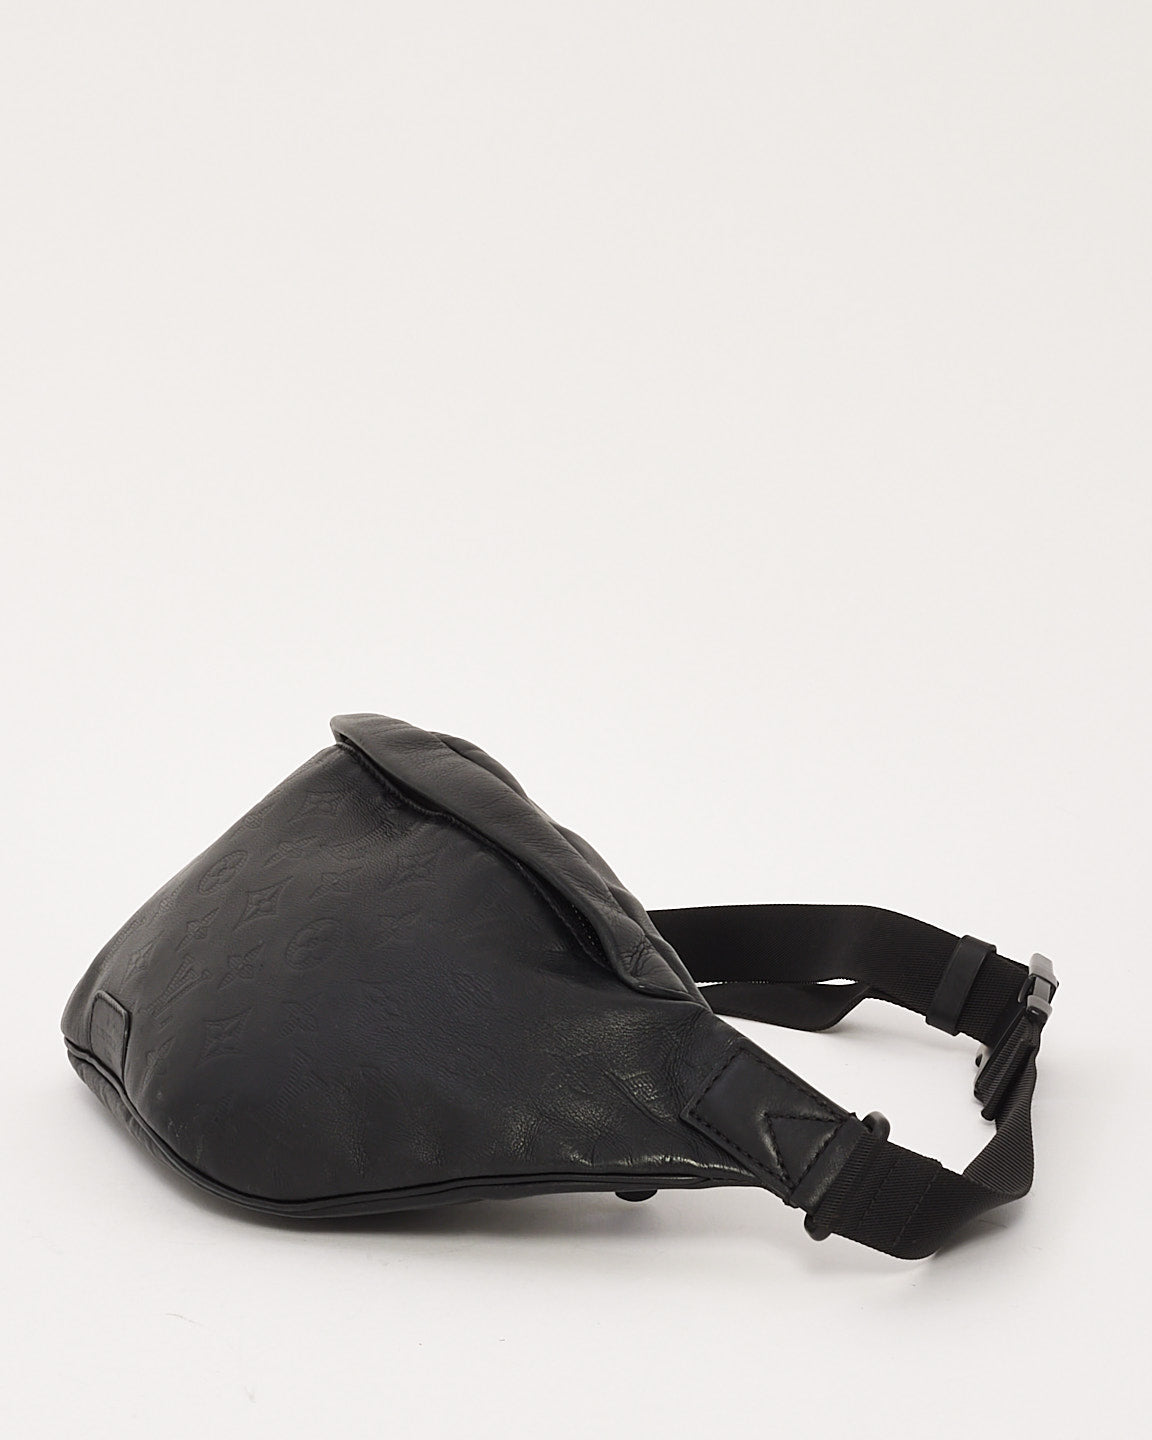 Louis Vuitton Black Empreinte Monogram Leather Men's Bum Bag